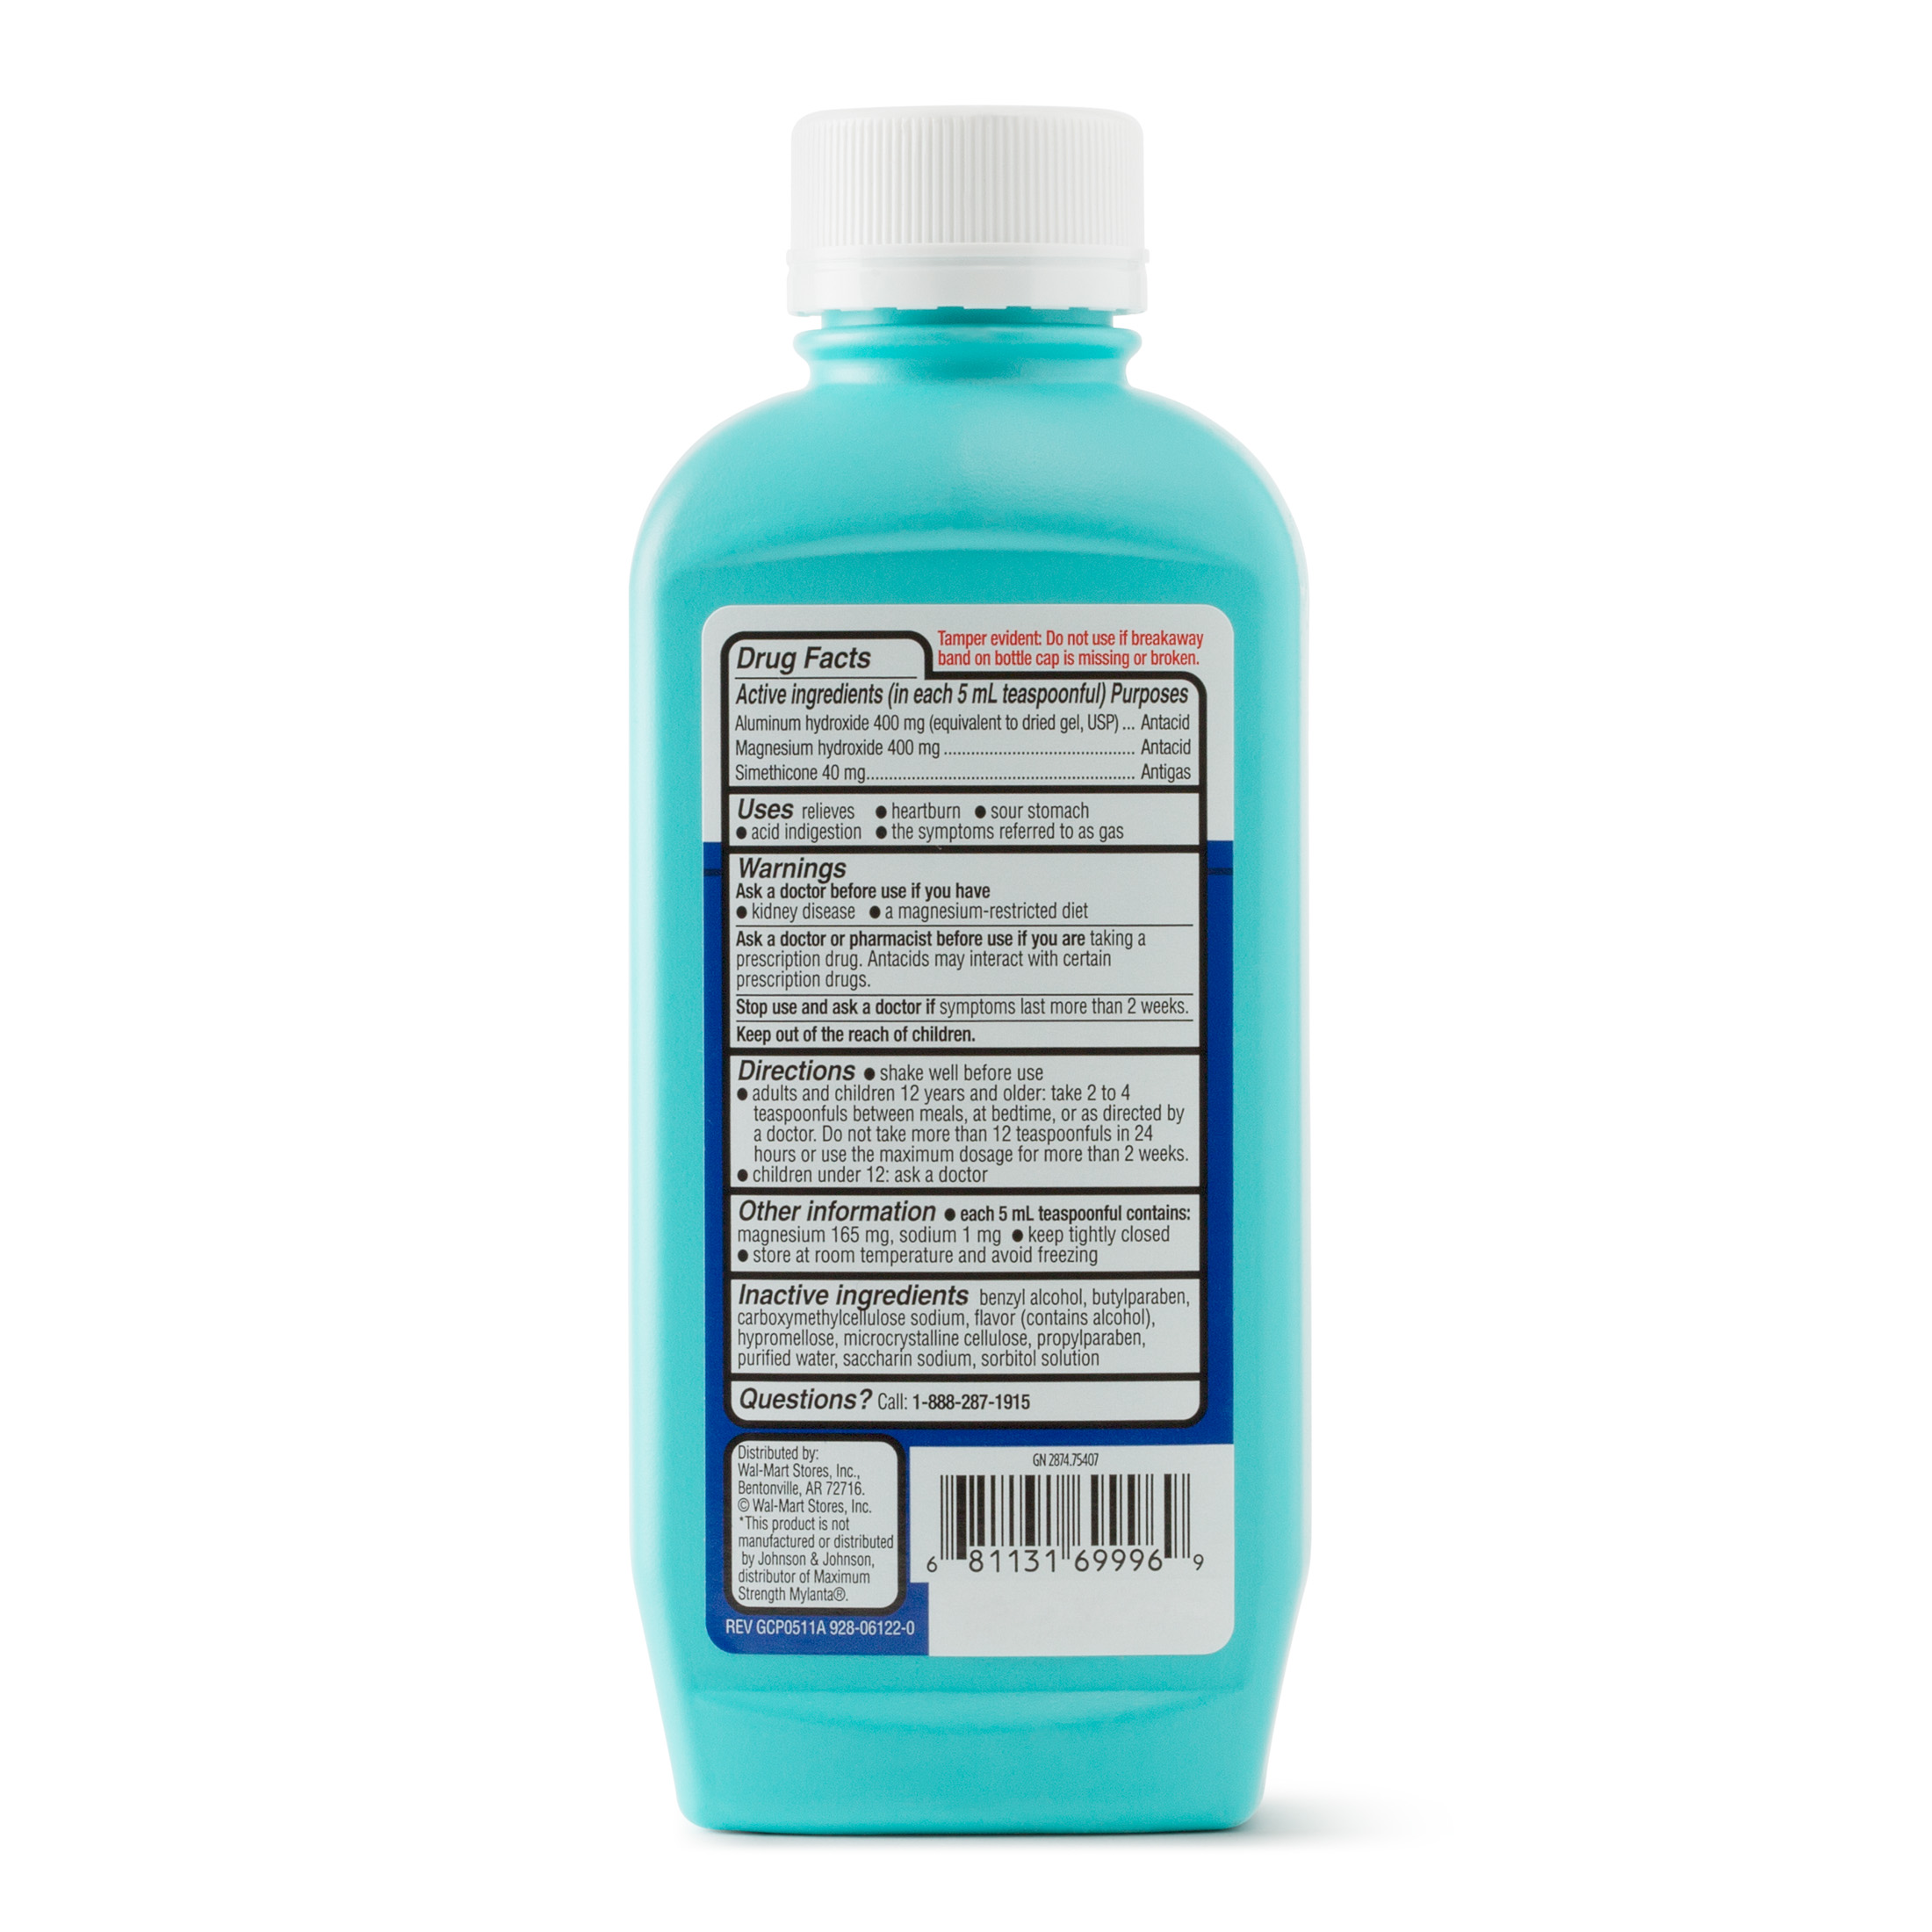 Equate Maximum Strength Antacid/Anti-Gas Original Flavor Liquid, 400 mg, 12 Oz - image 3 of 4